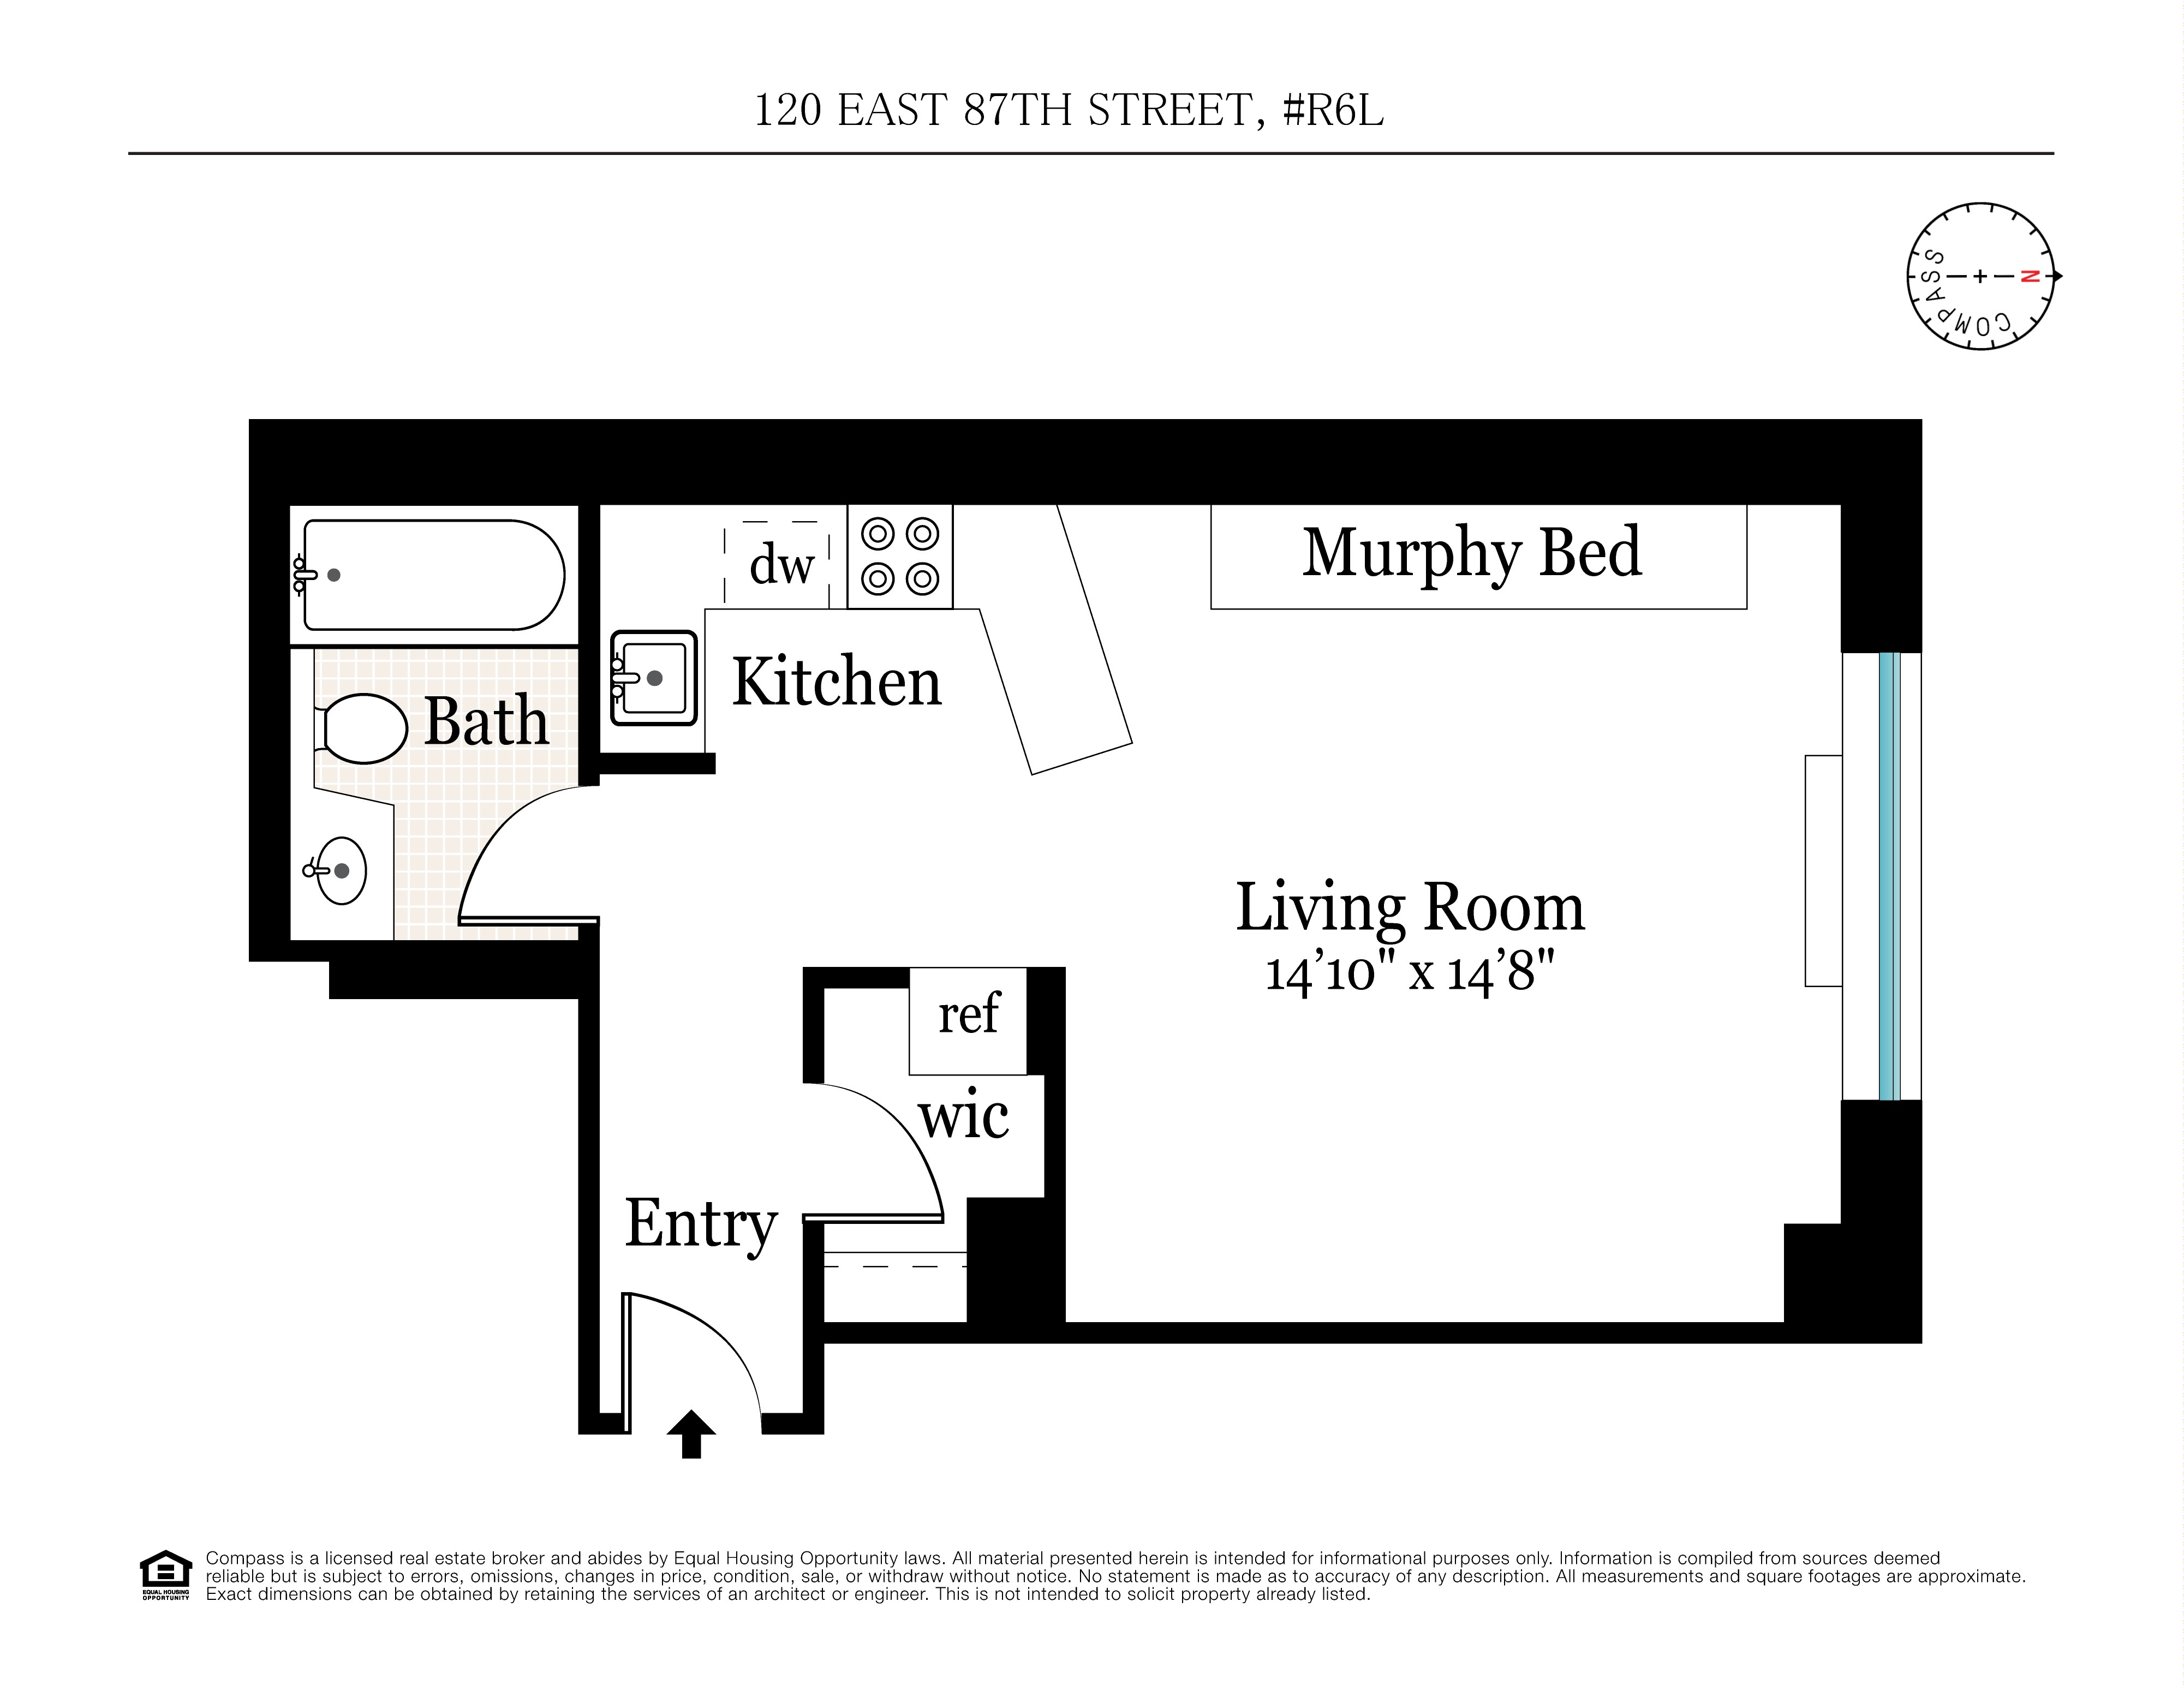 Floorplan for 120 East 87th Street, R6L